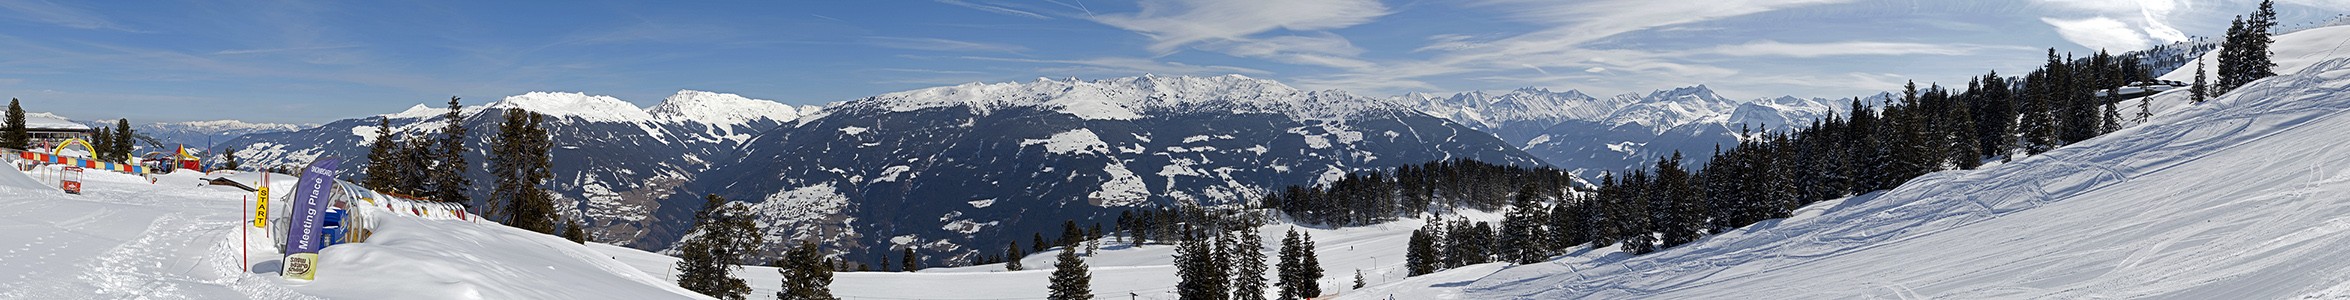 Kitzbüheler Alpen Hochzillertal